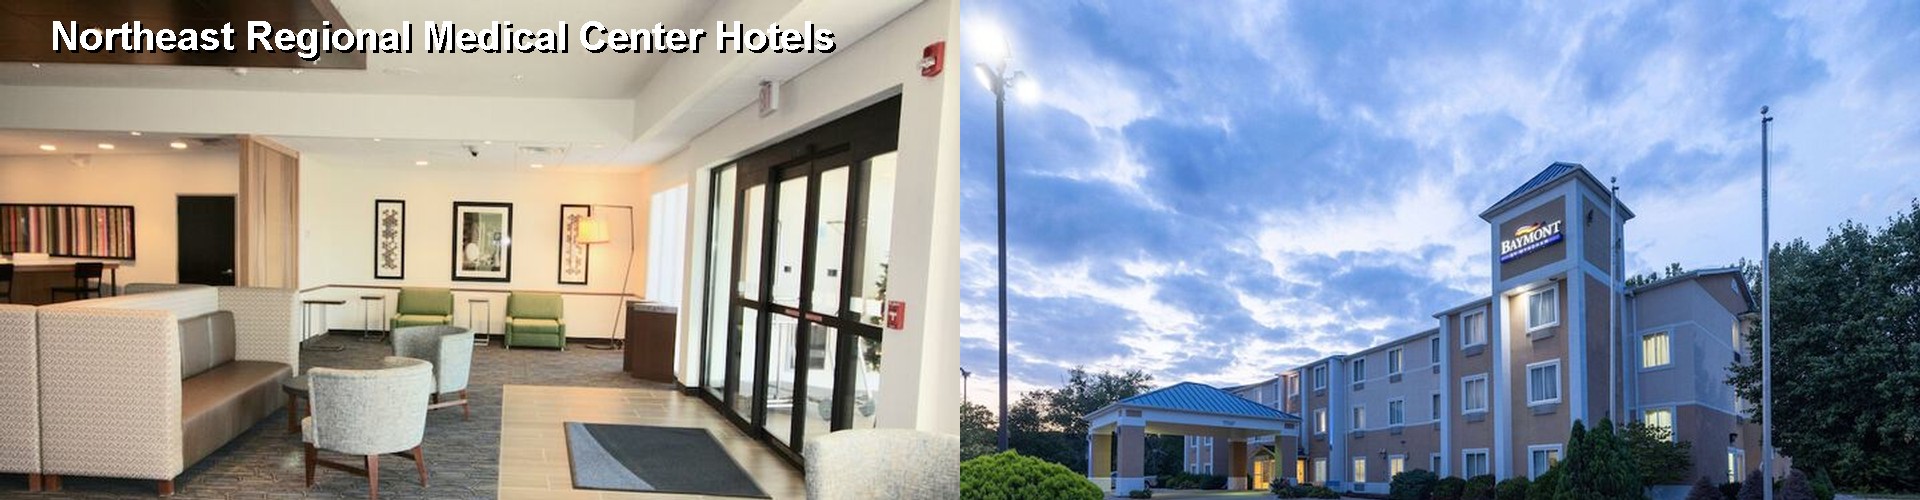 3 Best Hotels near Northeast Regional Medical Center